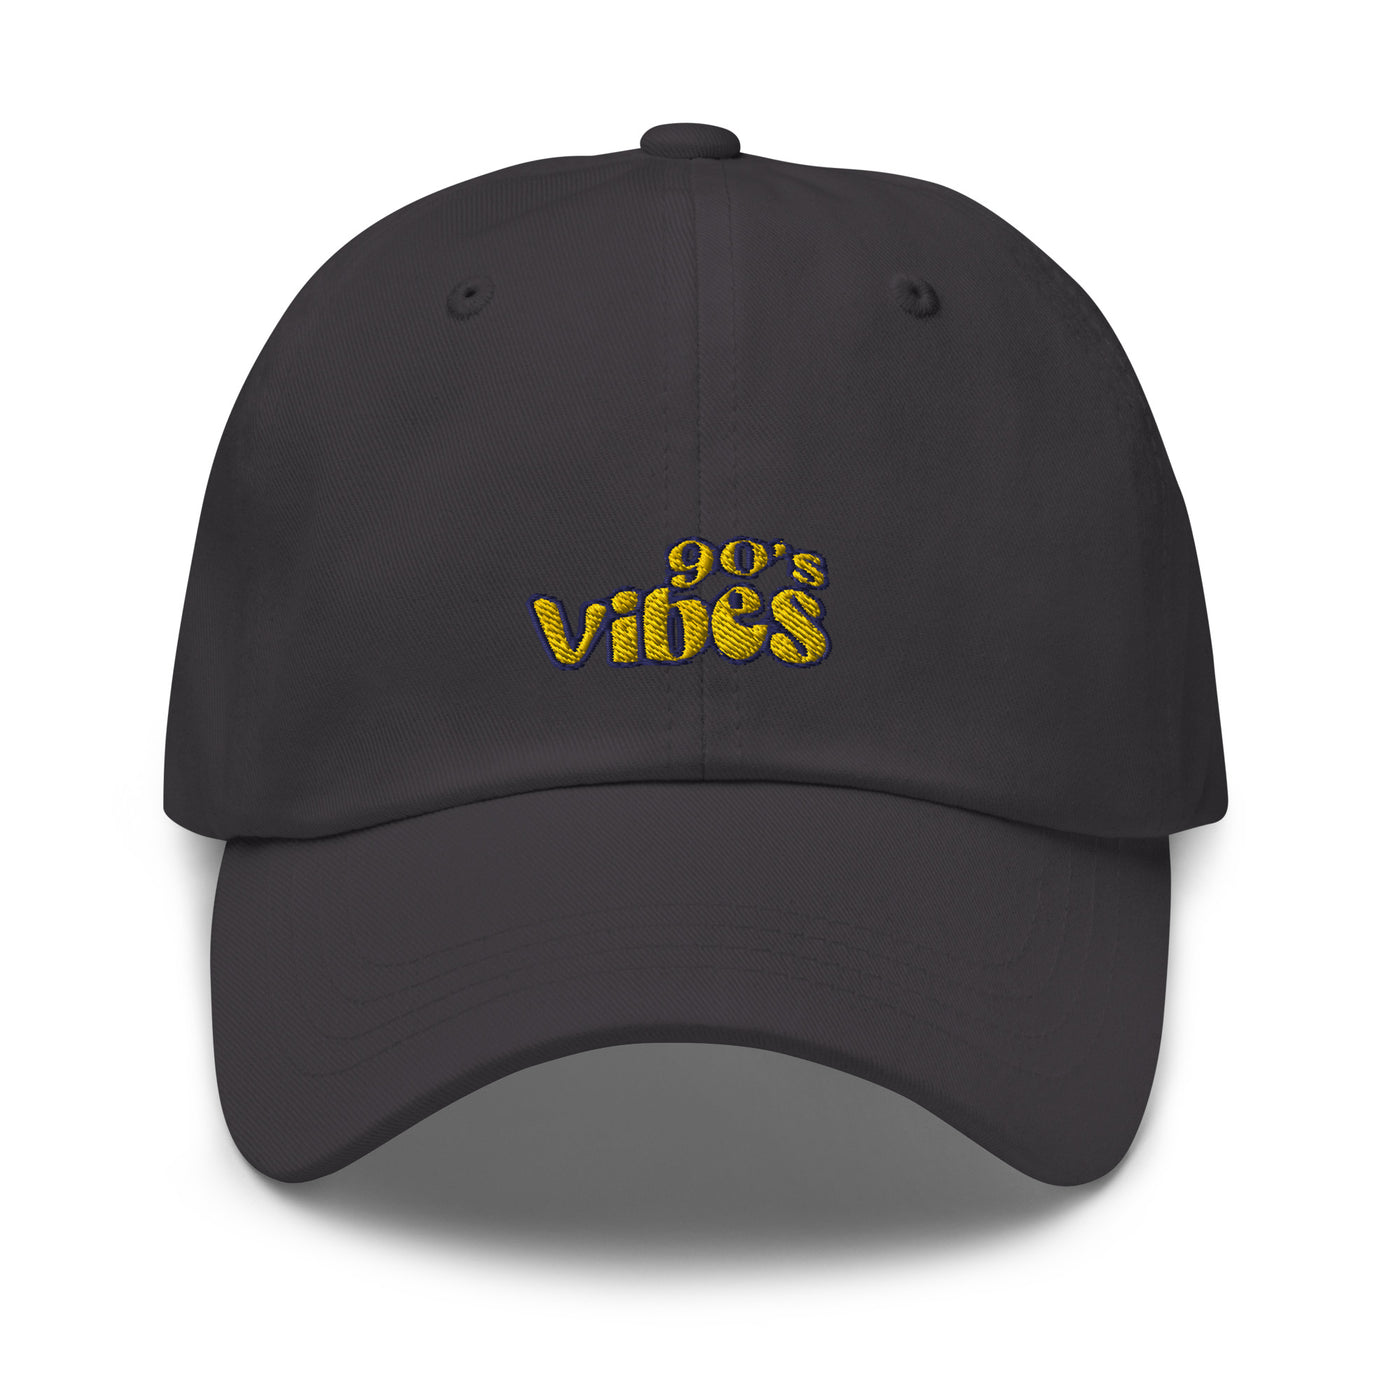 90' VIBES unisex hat